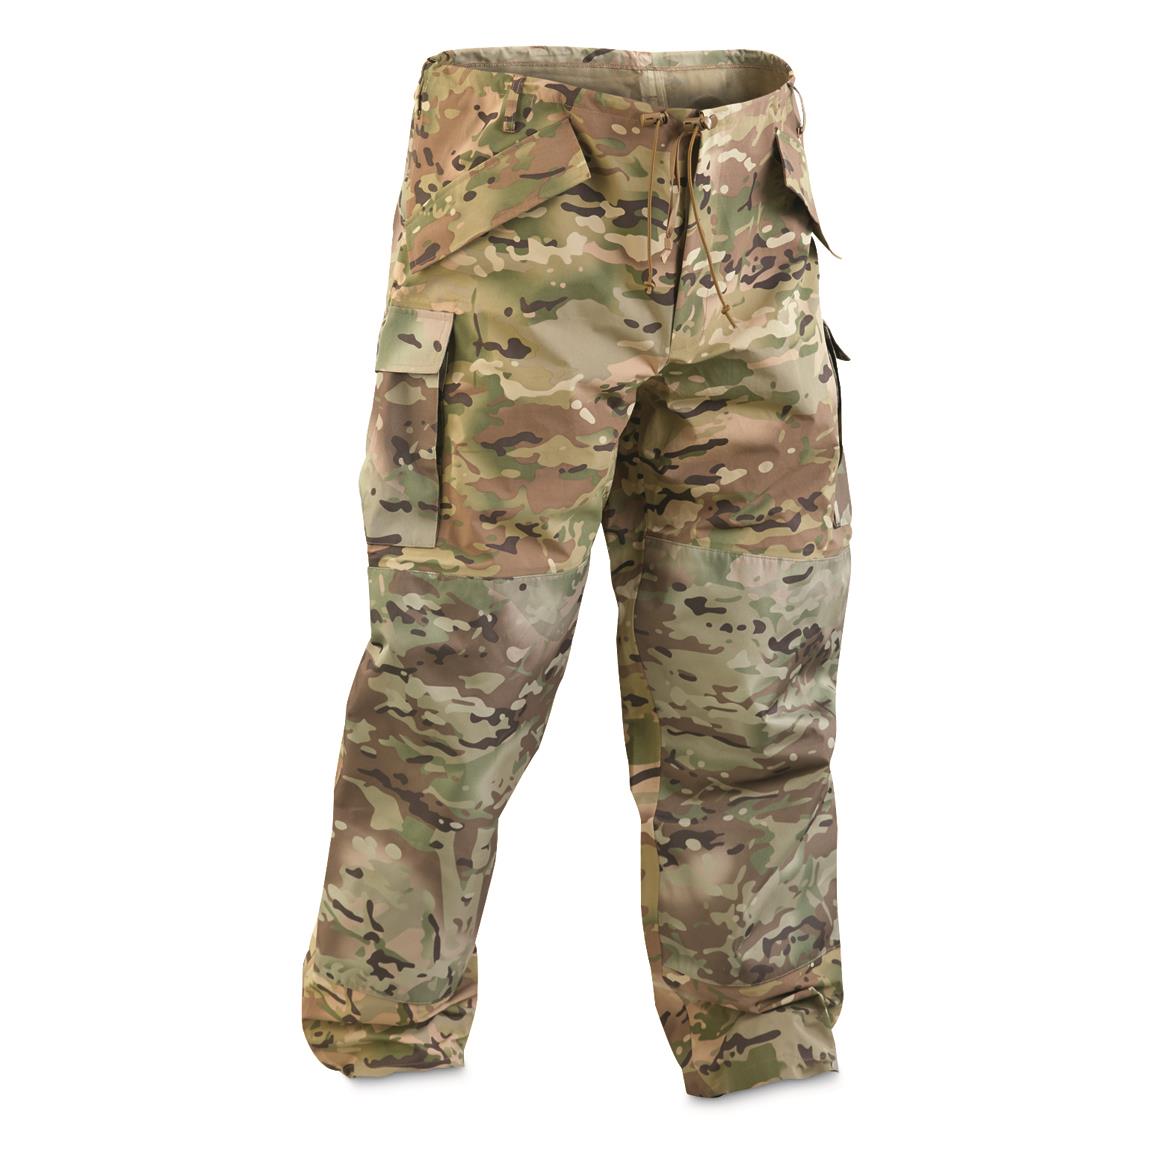 U S Air Force Surplus Apecs Ocp Waterproof Gore Tex Overpants New Military Tactical Pants At Sportsman S Guide